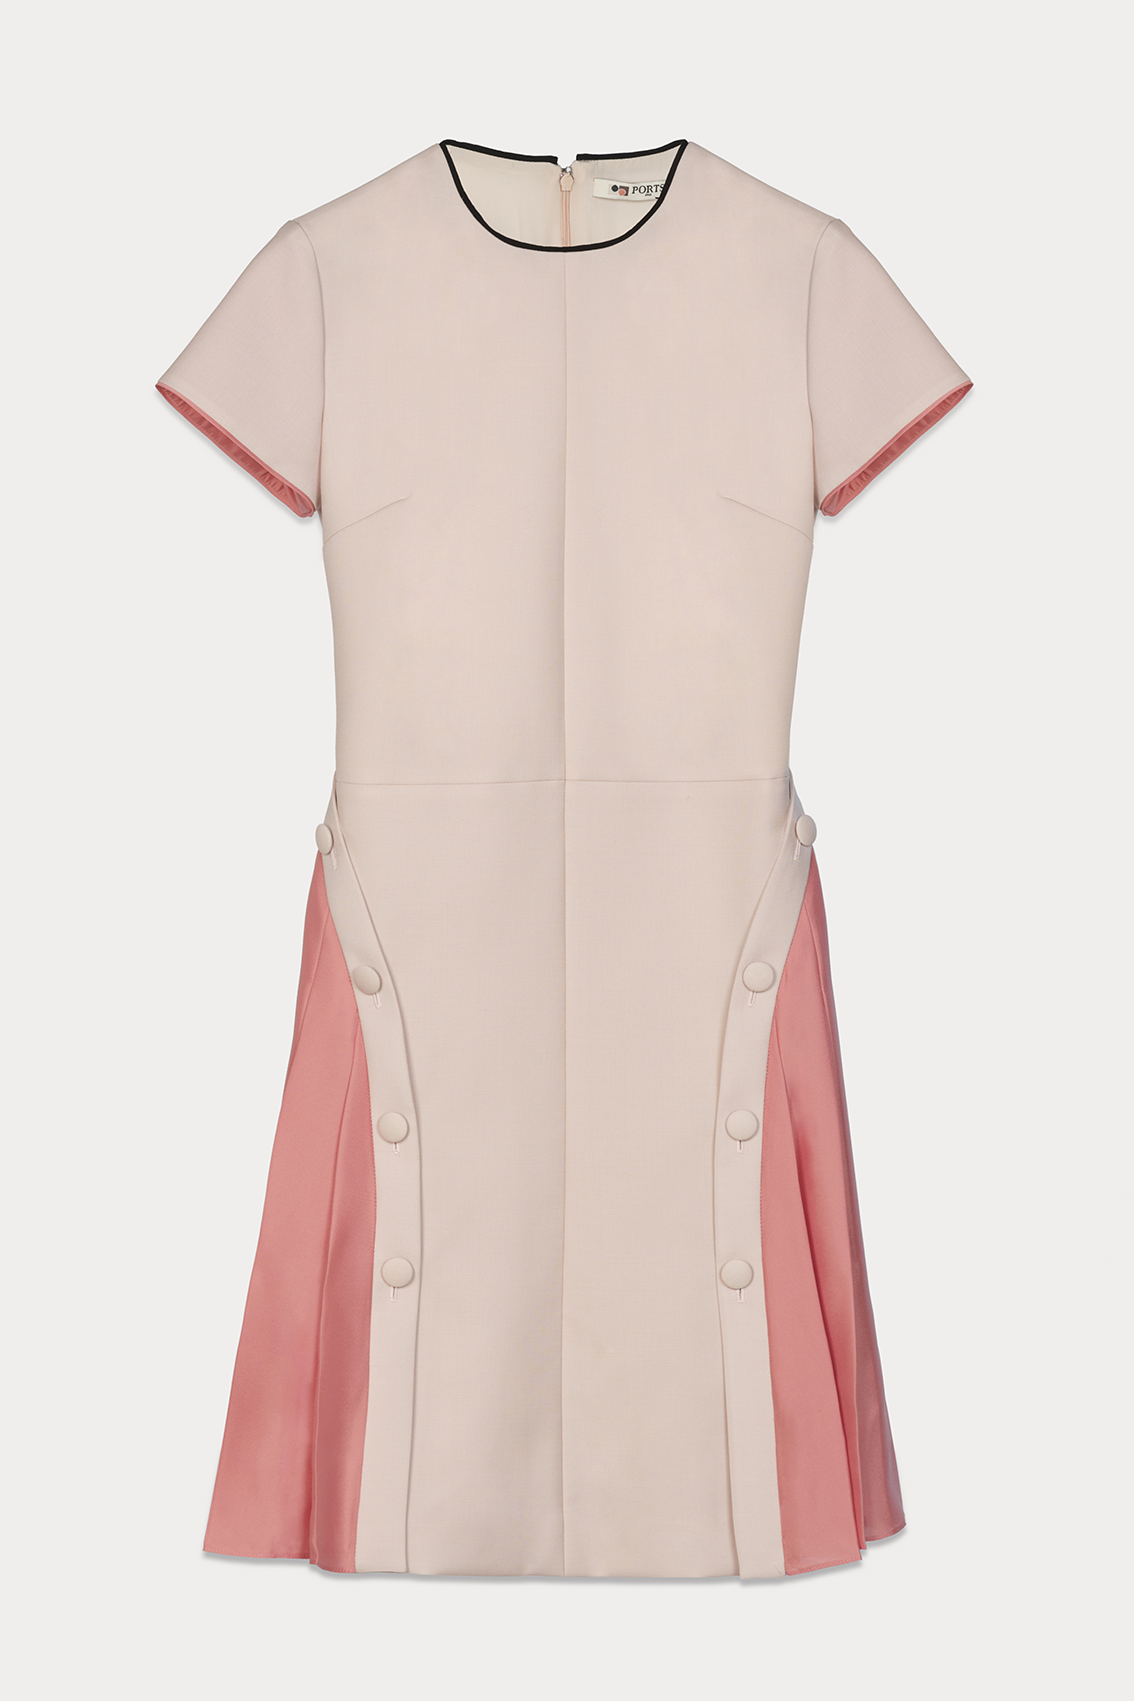 Blush'd Short Sleeve Arc Pleated Dress